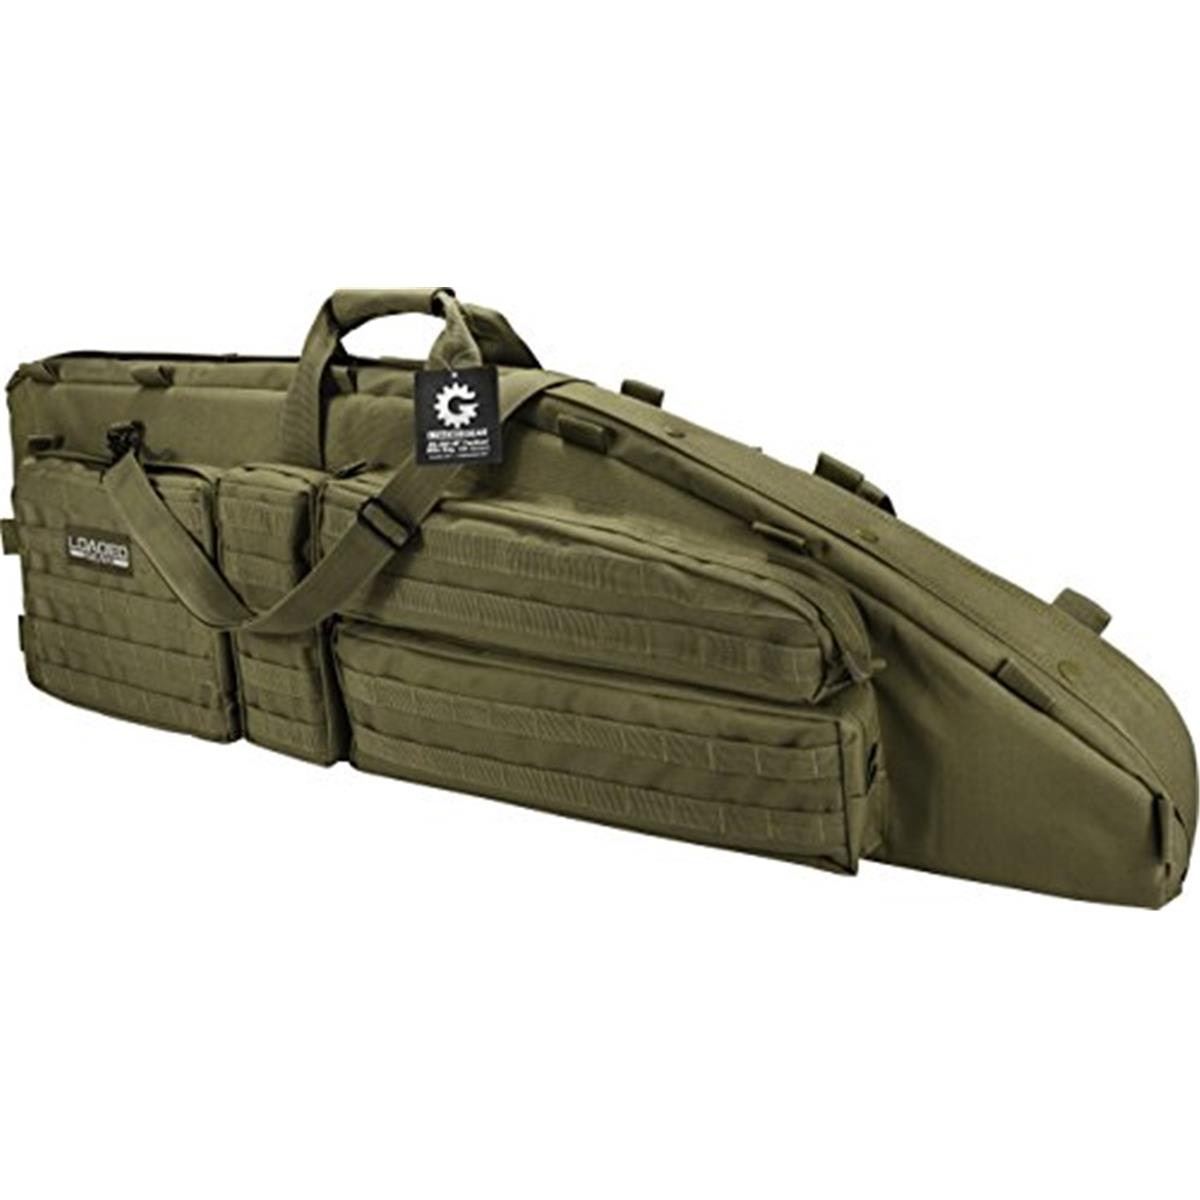 Bi12554 Loaded Gear Rx-600 46 In. Tactical Rifle Bag Od Green